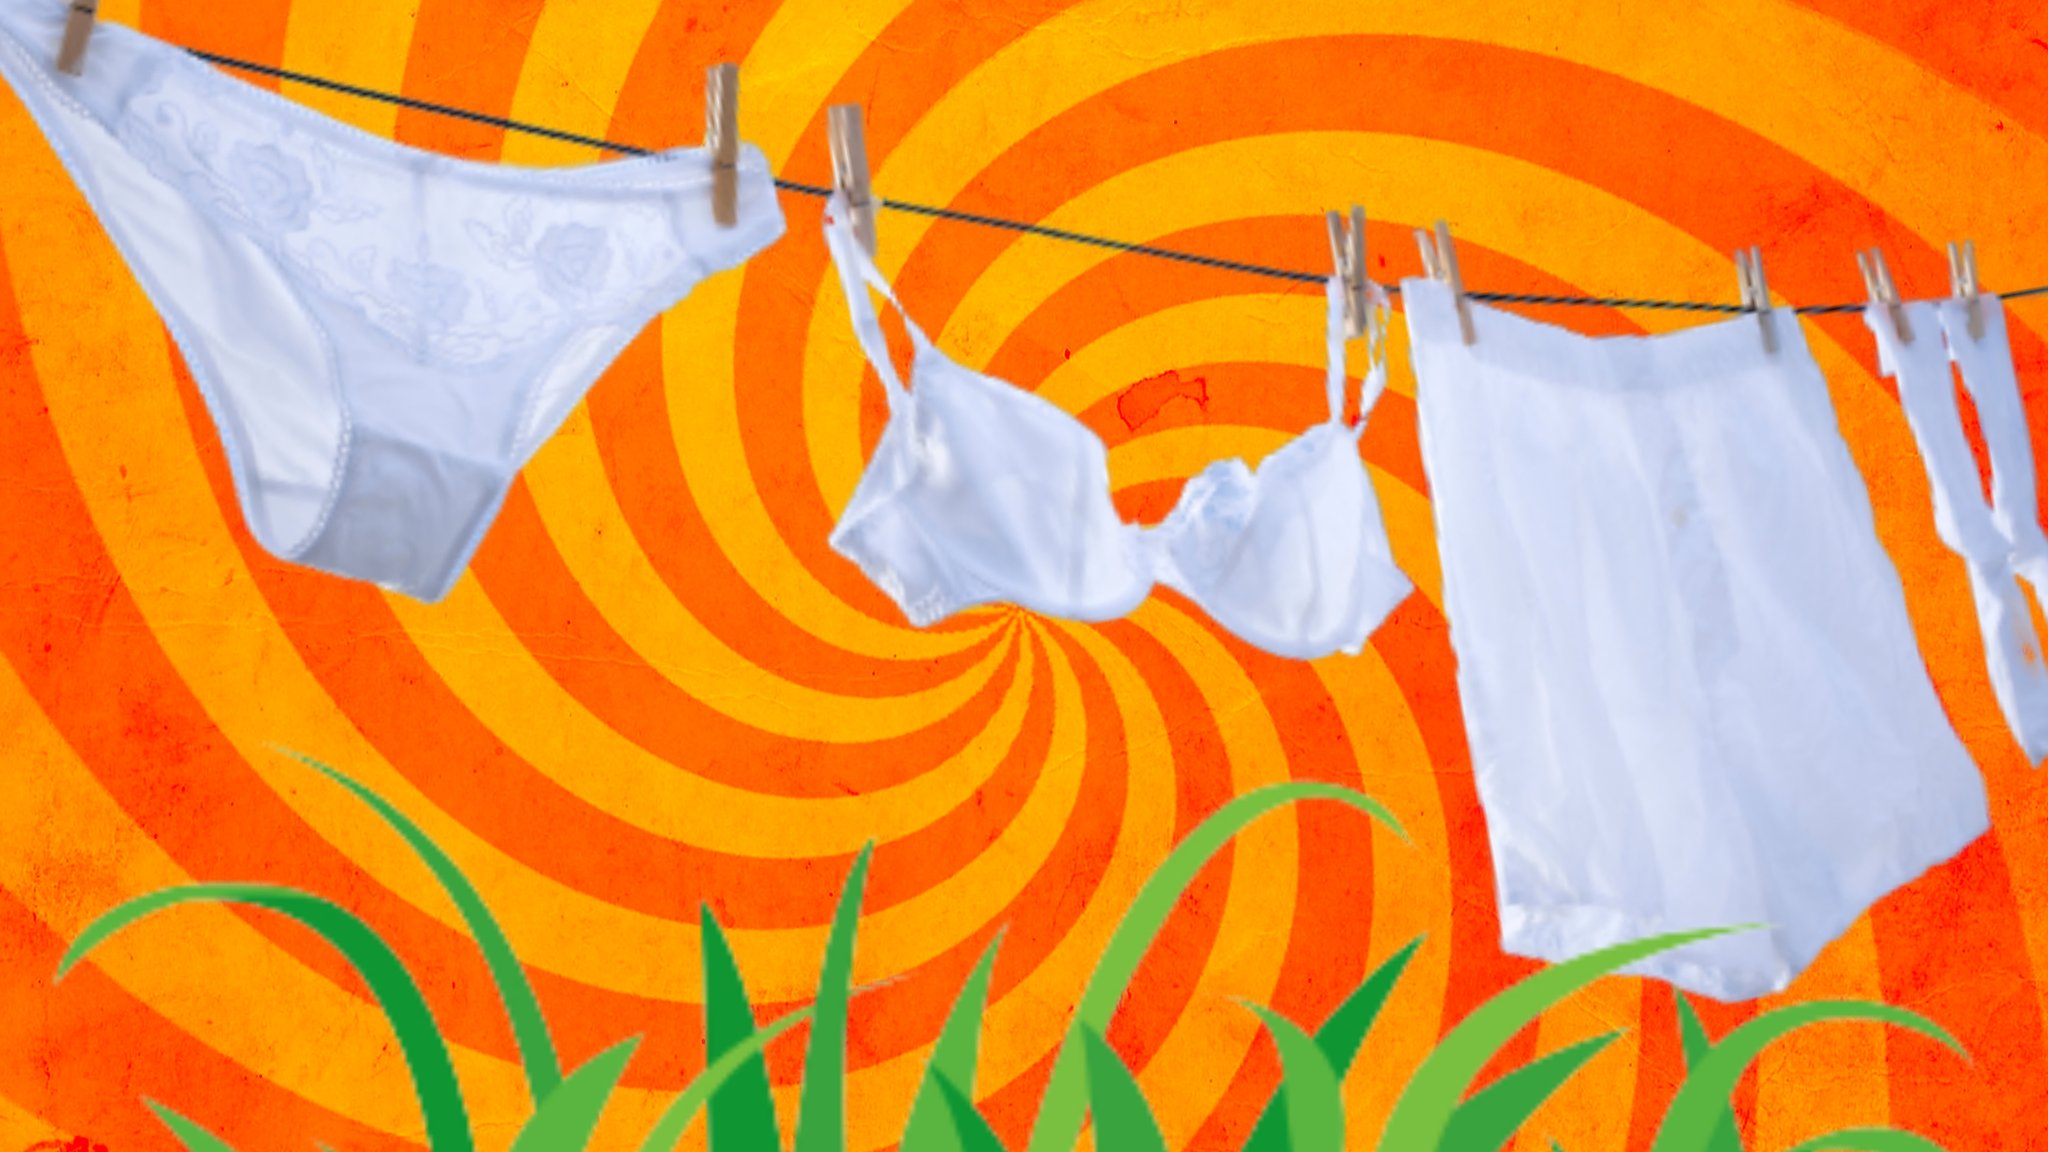 Moray farmer uses underwear to test soil fertility - BBC News